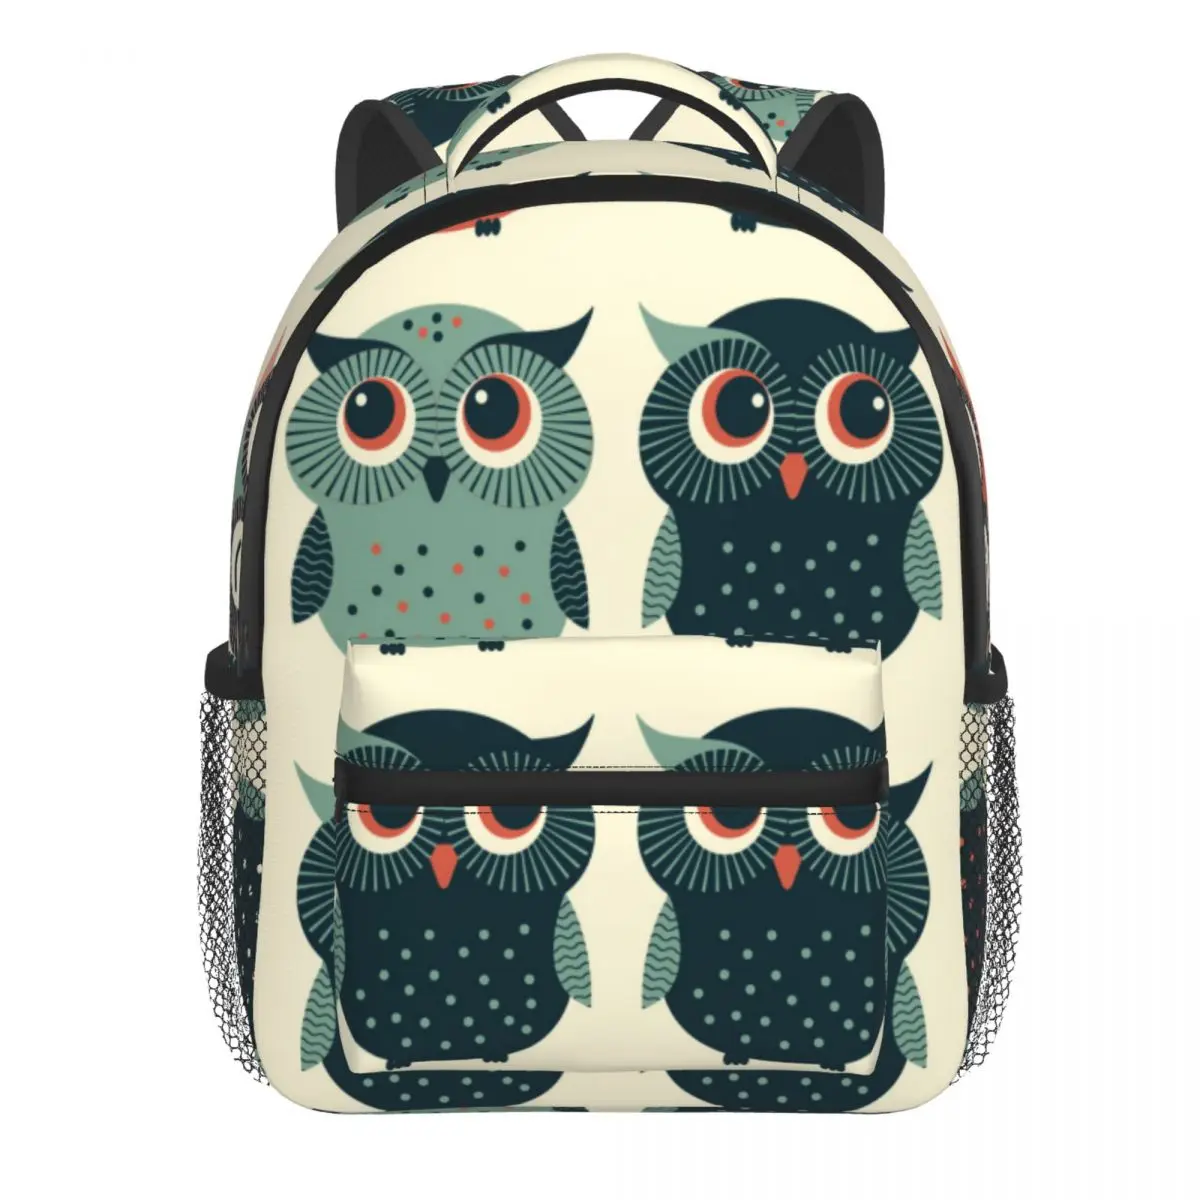 Cute Owls Pattern Kids Backpack Toddler School Bag Kindergarten Mochila for Boys Girls 2-5 Years